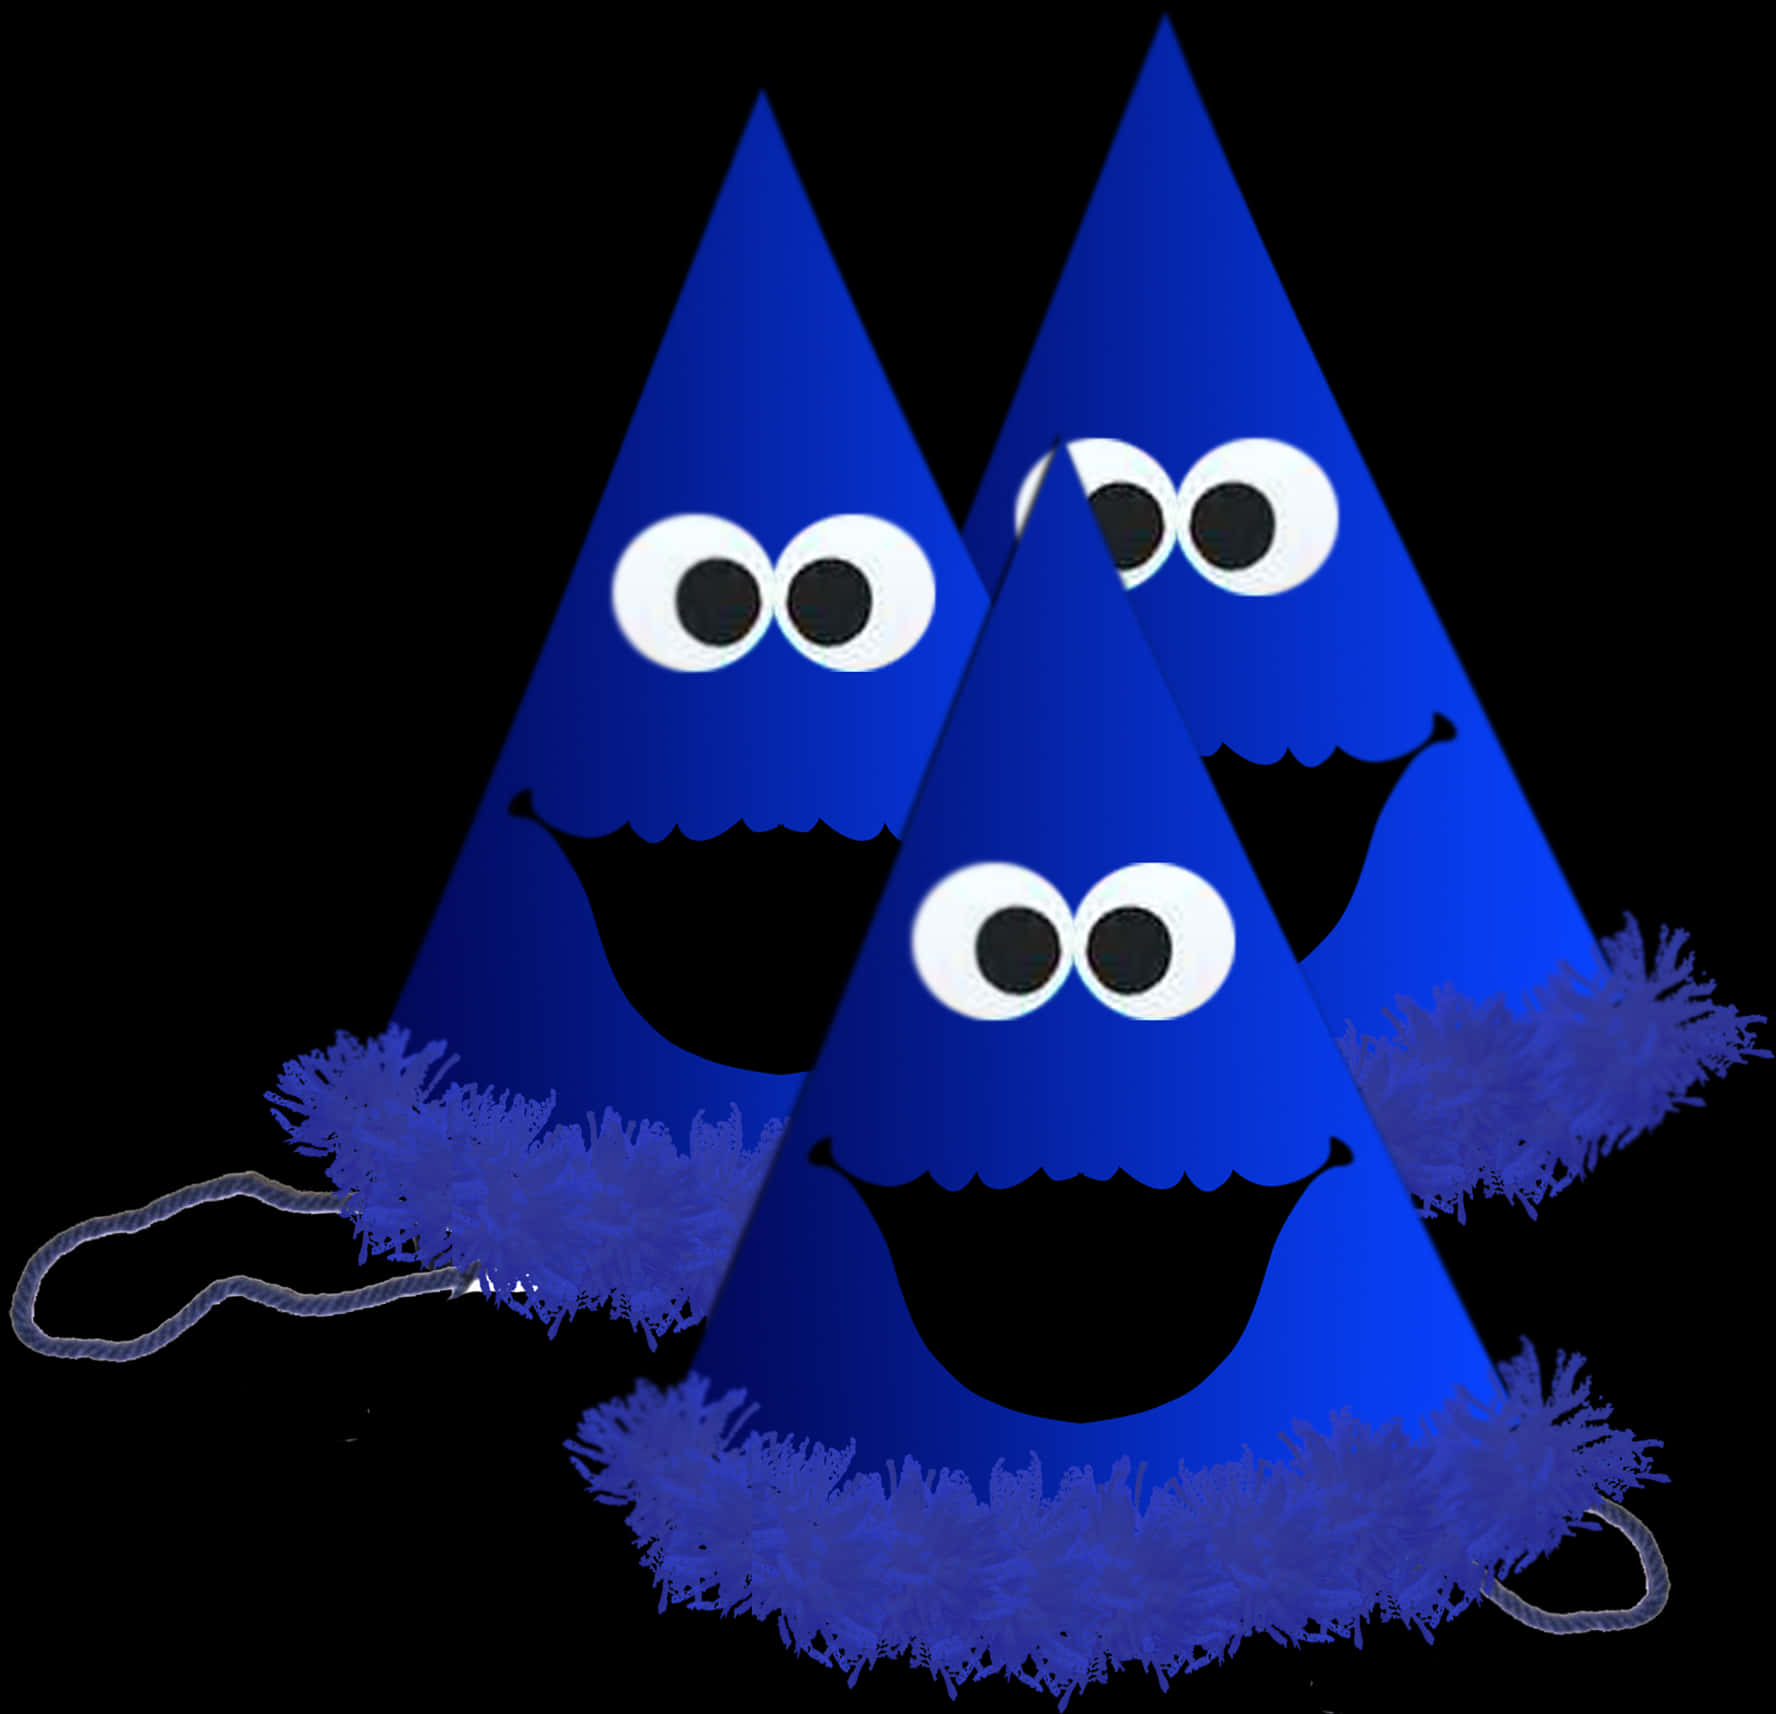 Blue Party Hats Cartoon Faces